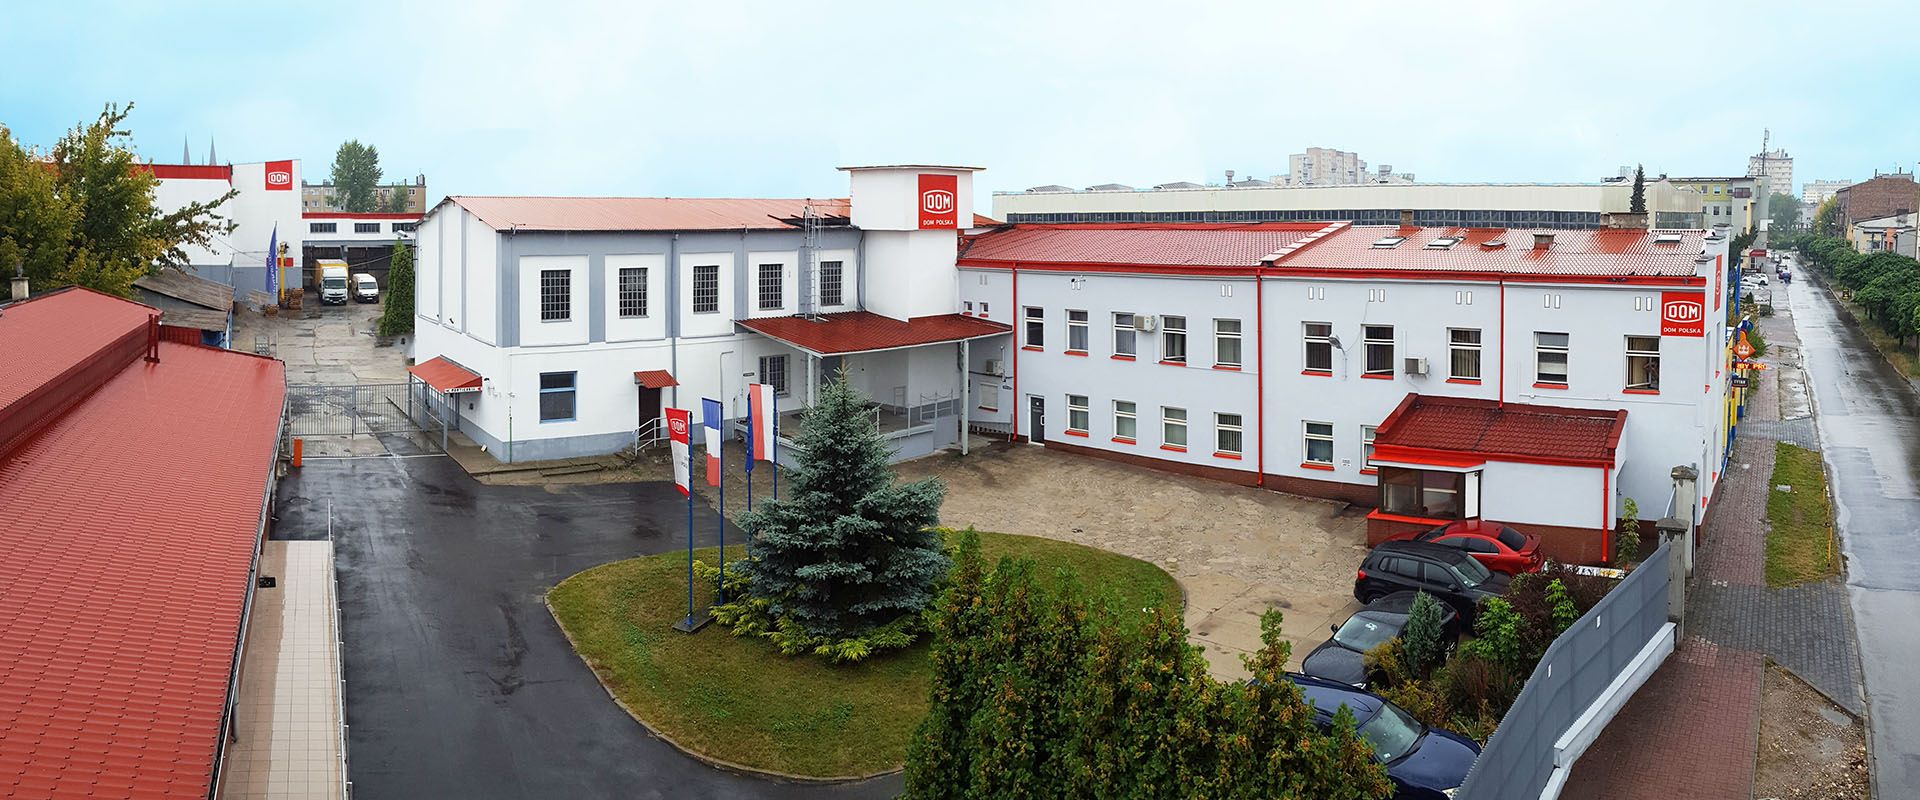 Dom Polska office